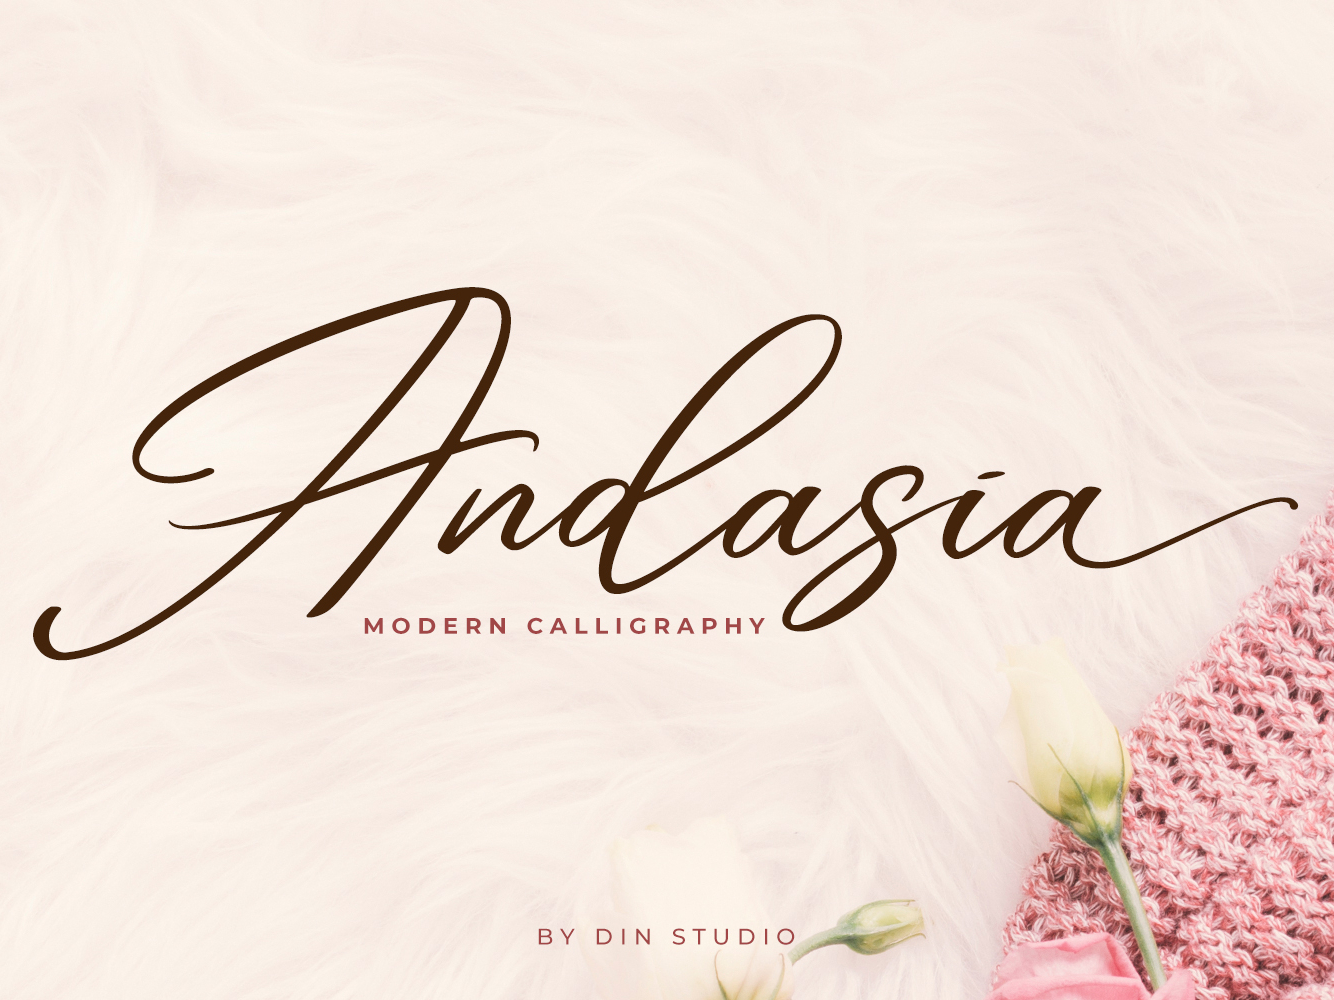 Andasia Script by Din Studio on Dribbble